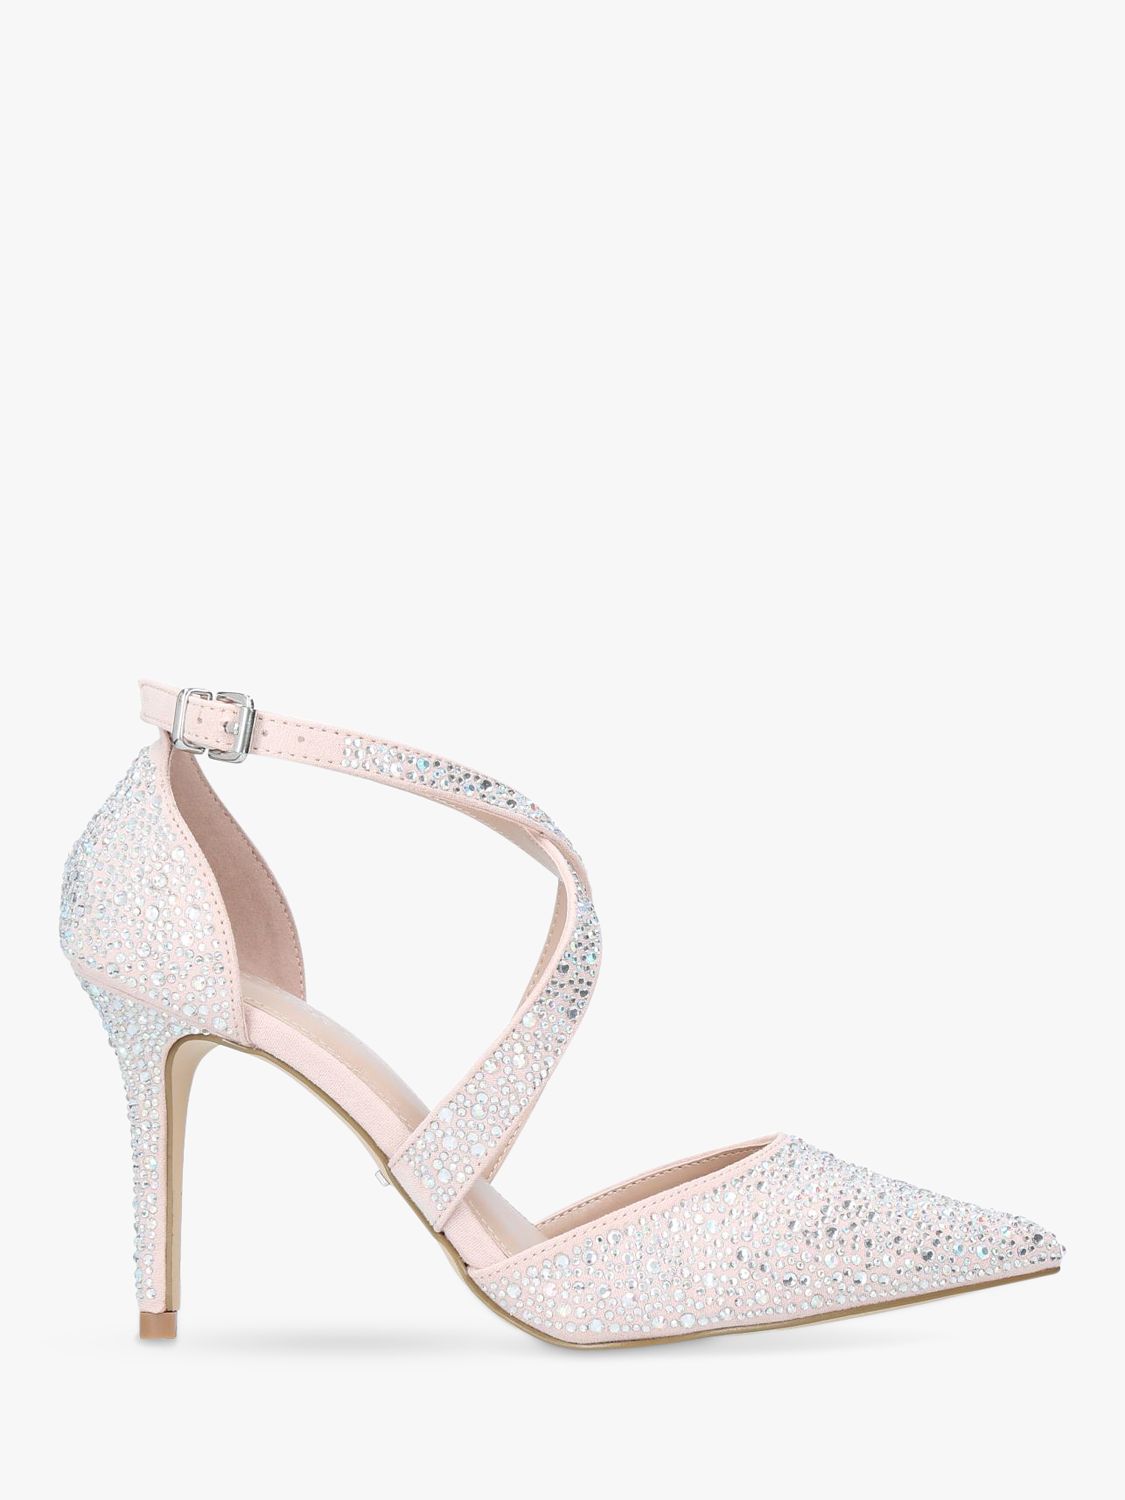 Carvela Kross Jewel Stiletto Court Shoes, Pink Blush, 3